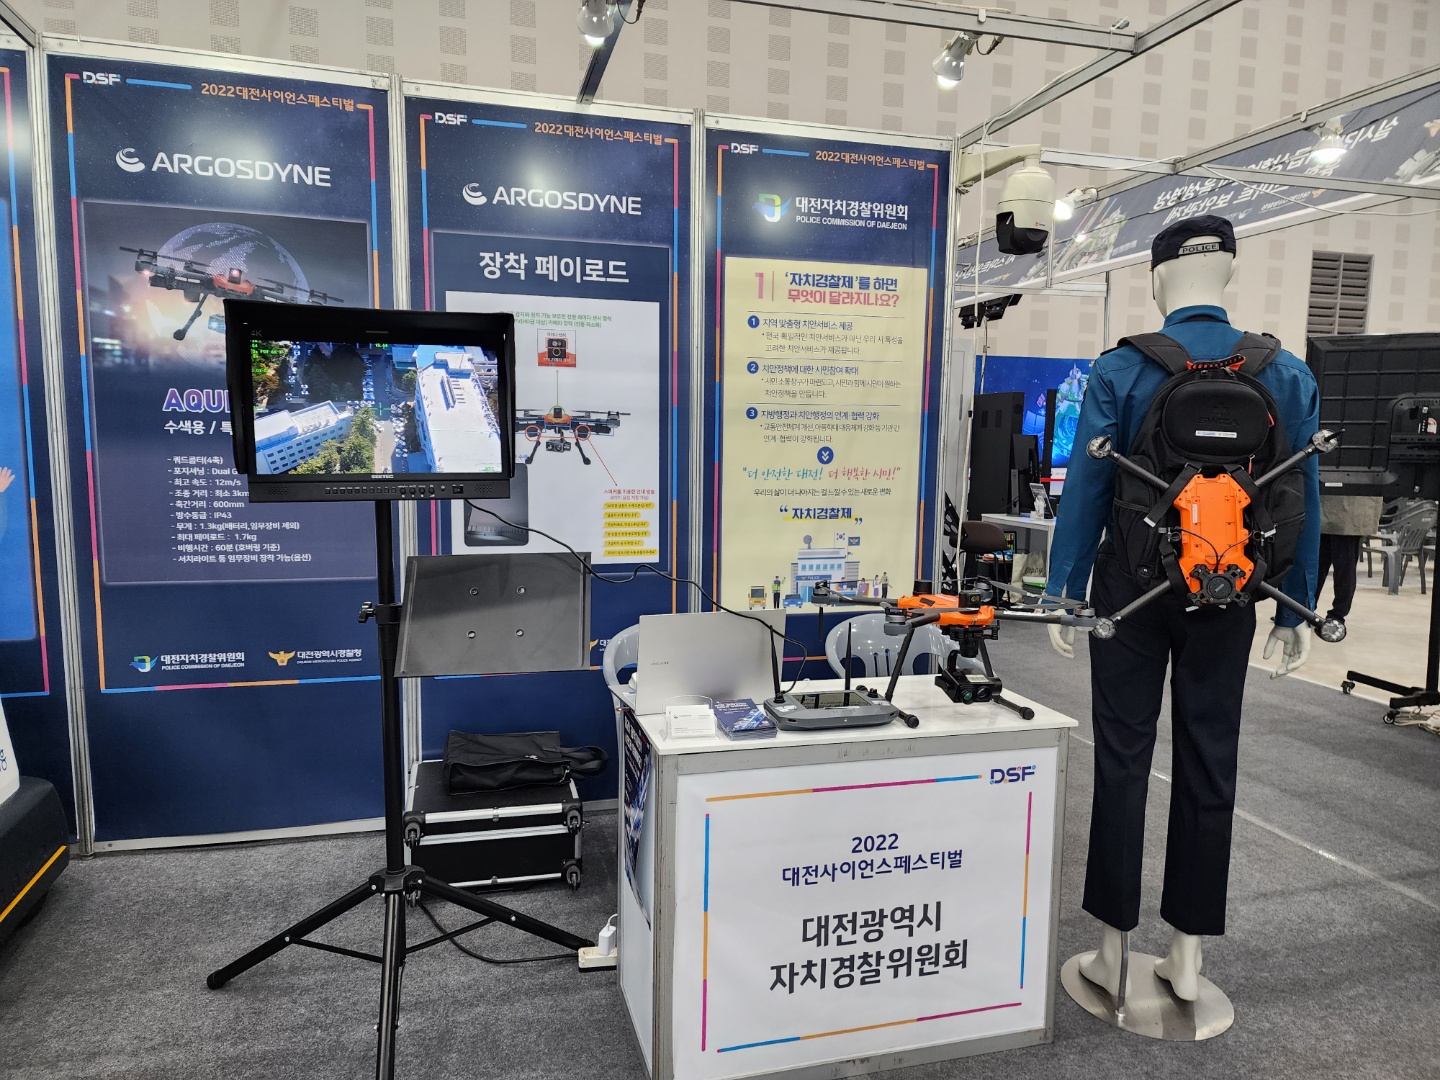 ARGOSDYNE, Participates in Science Festival with Daejeon Autonomous Police Committee